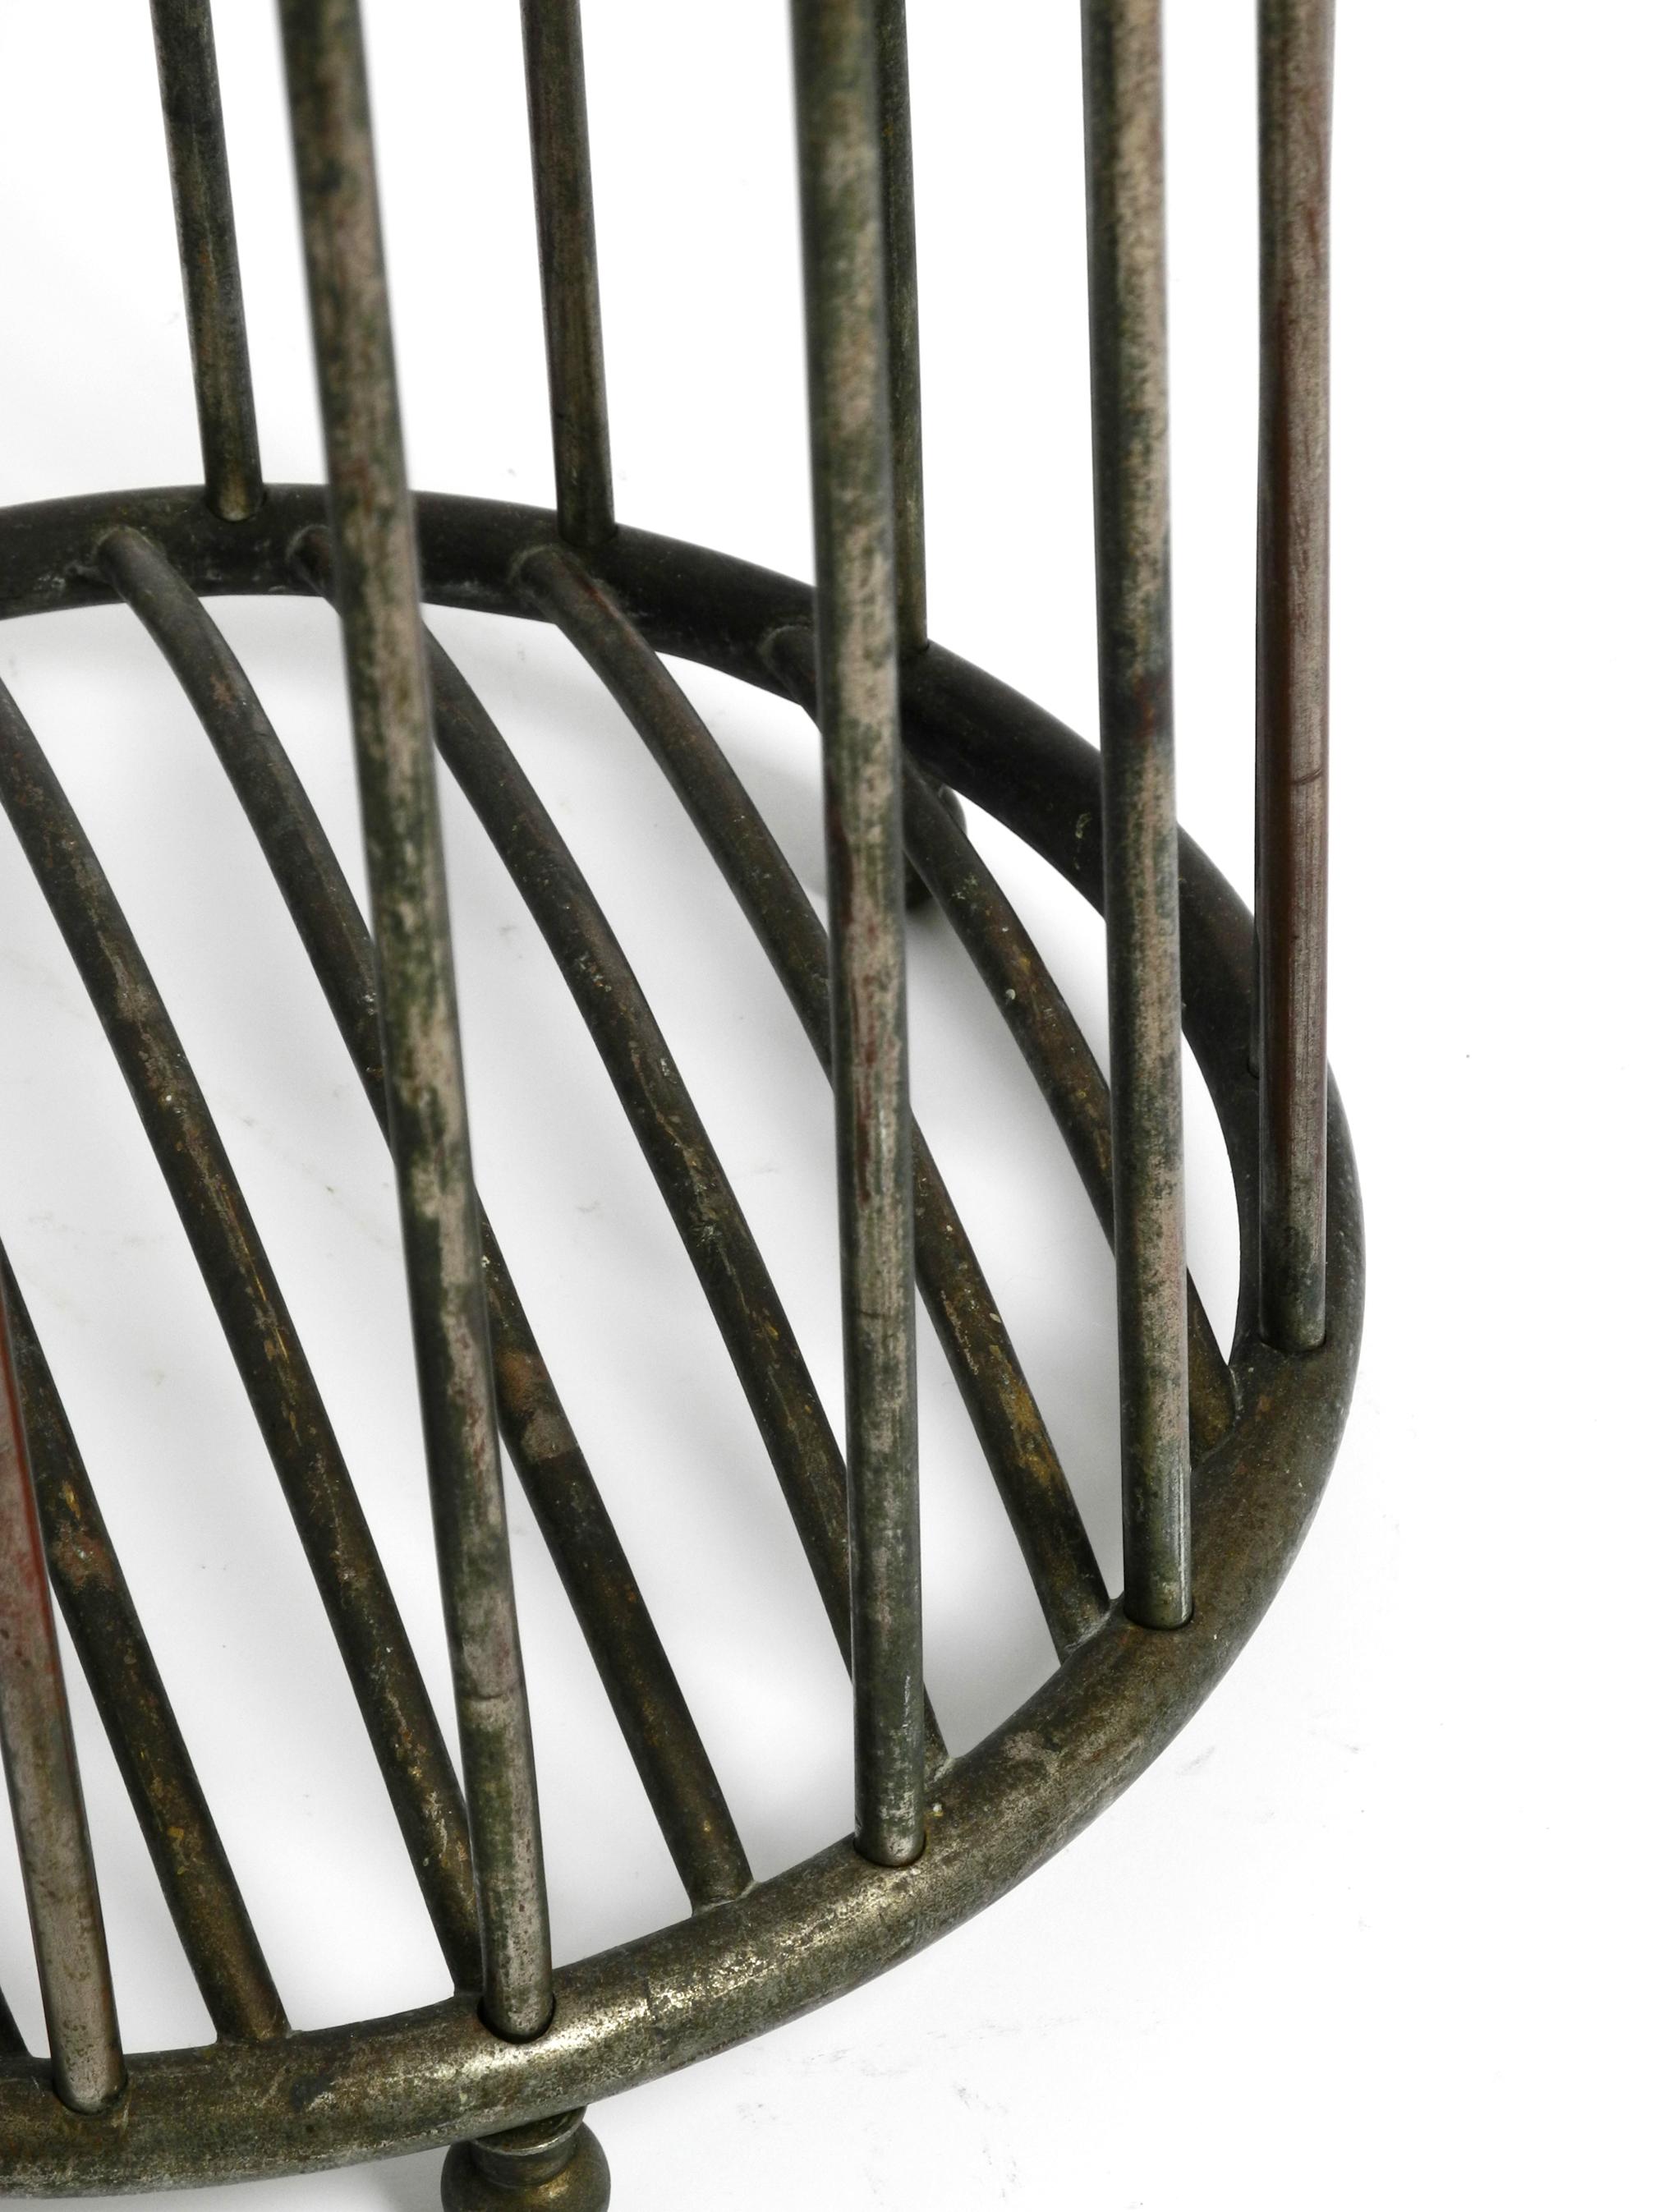 Original Mott's Plumbing Towel Basket Made of Nickel-Plated Brass from the 1910s 1